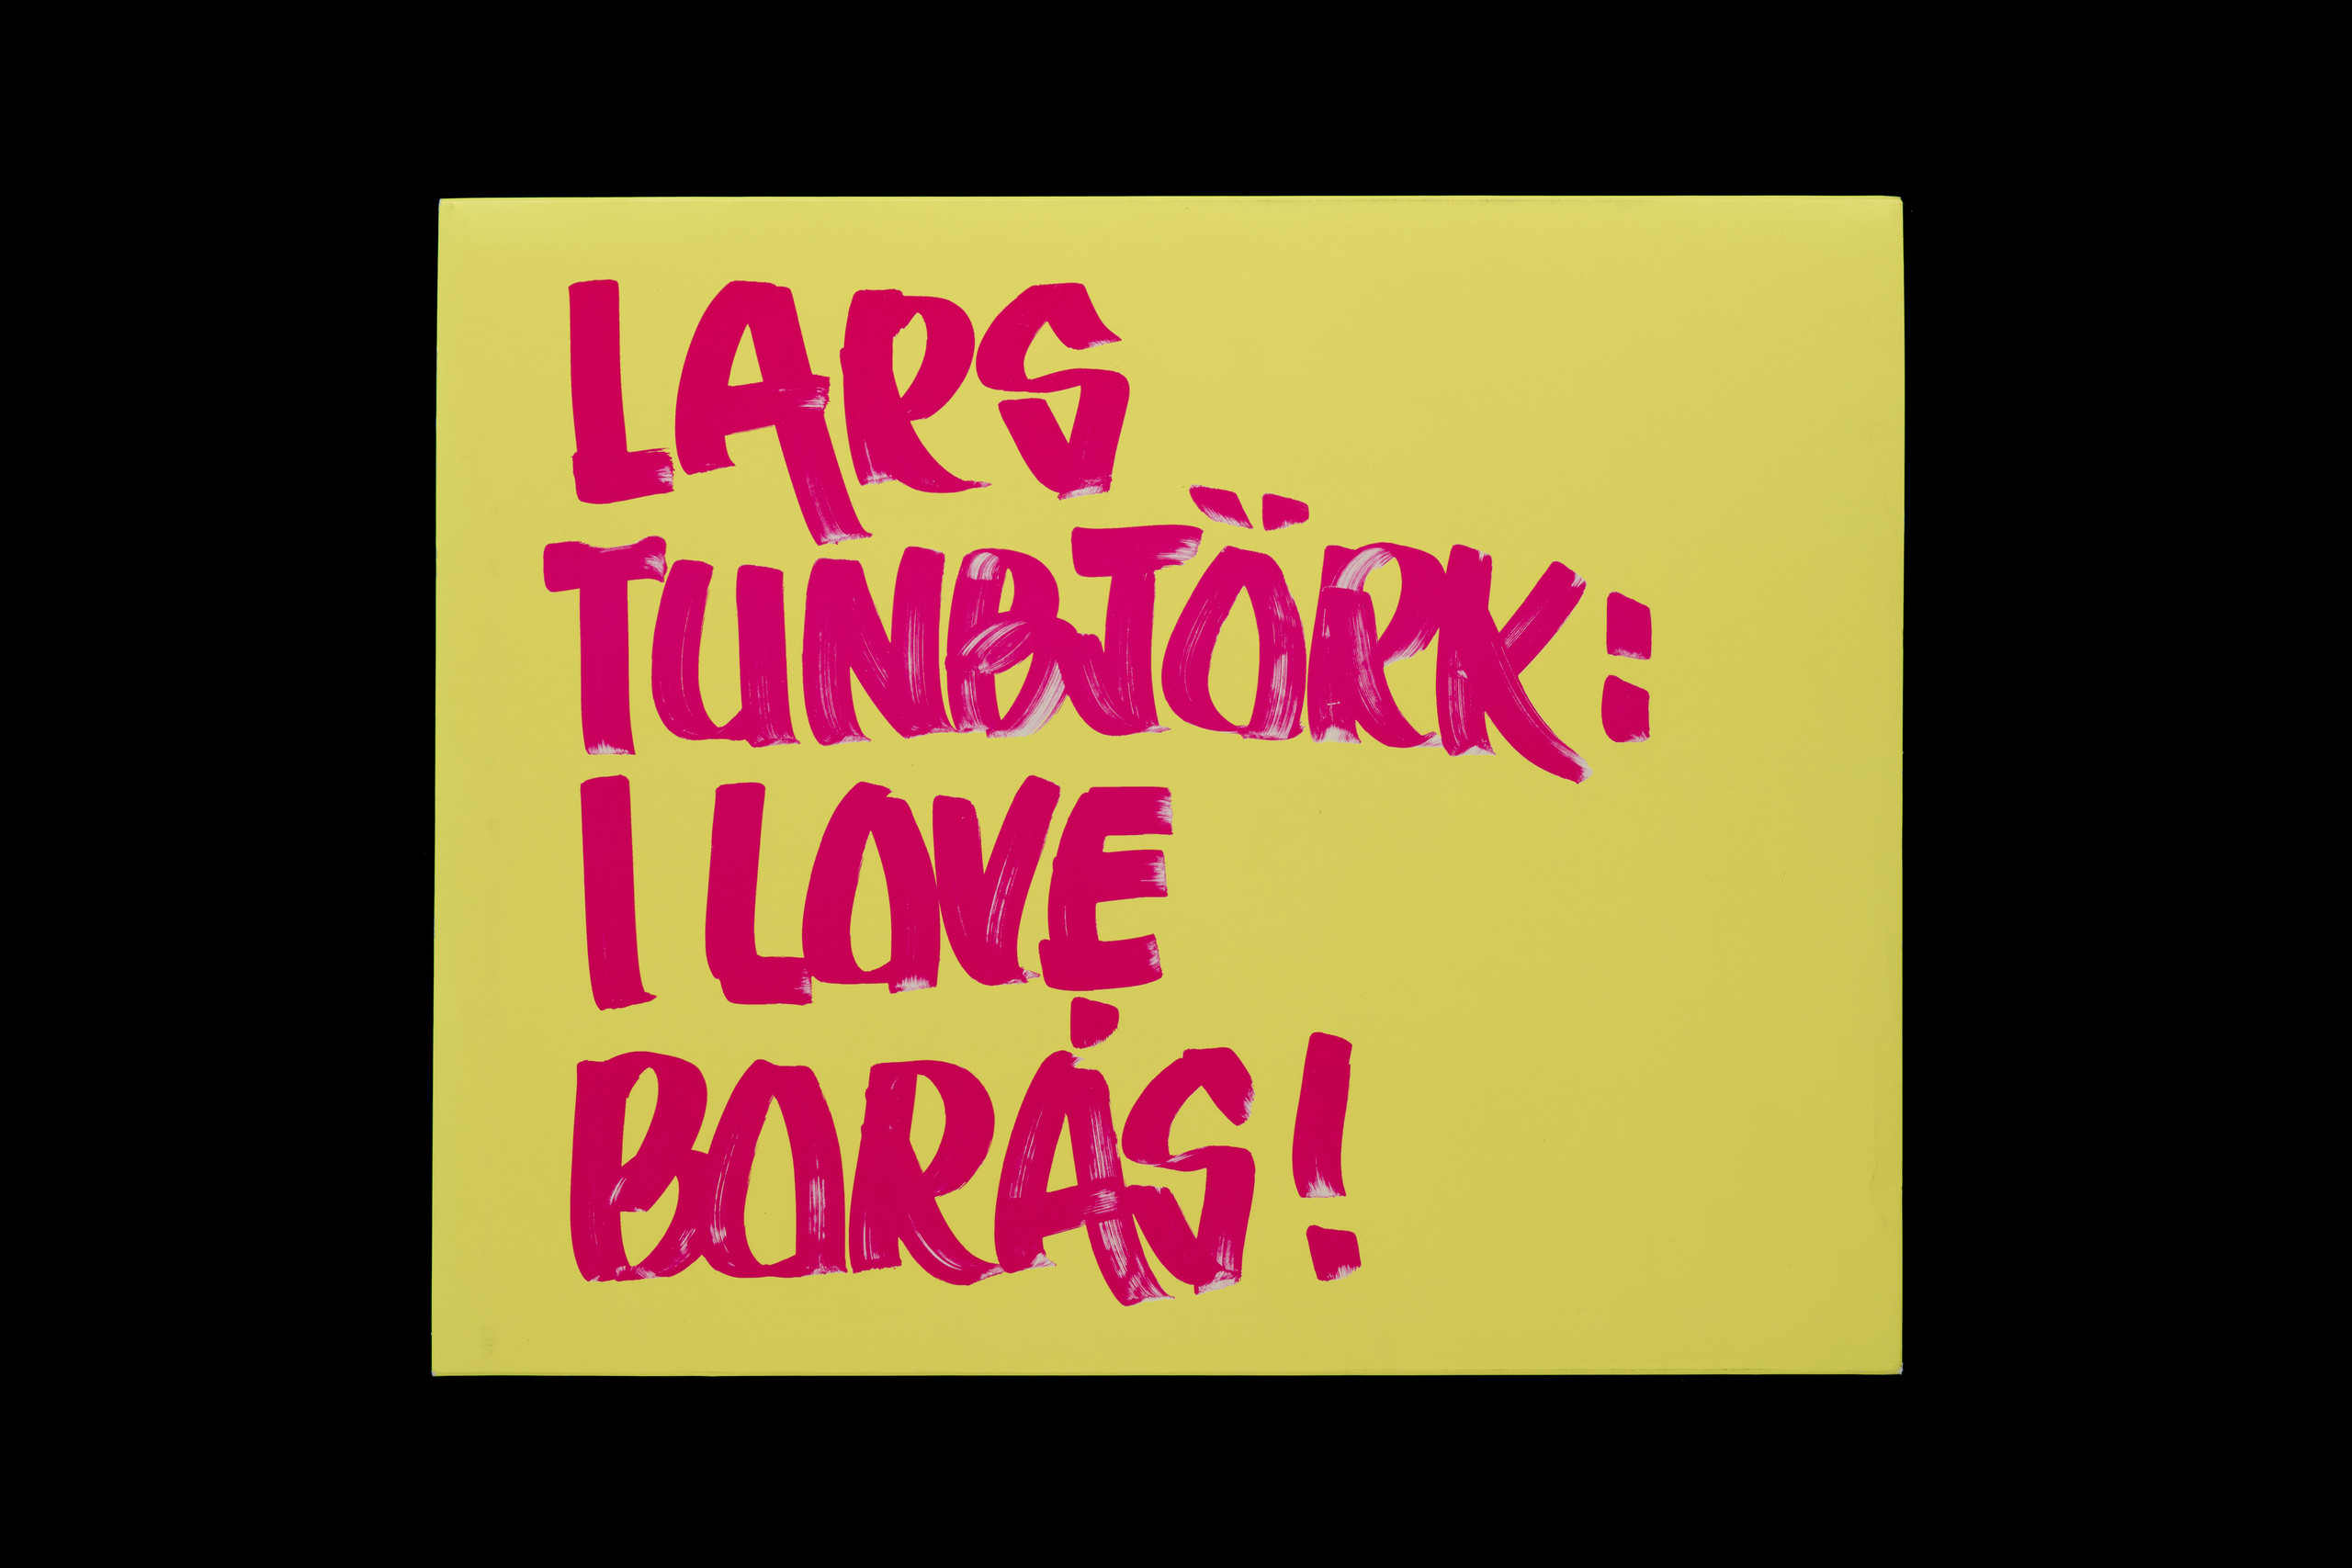 I Love Borås! by Lars Tunbjörk